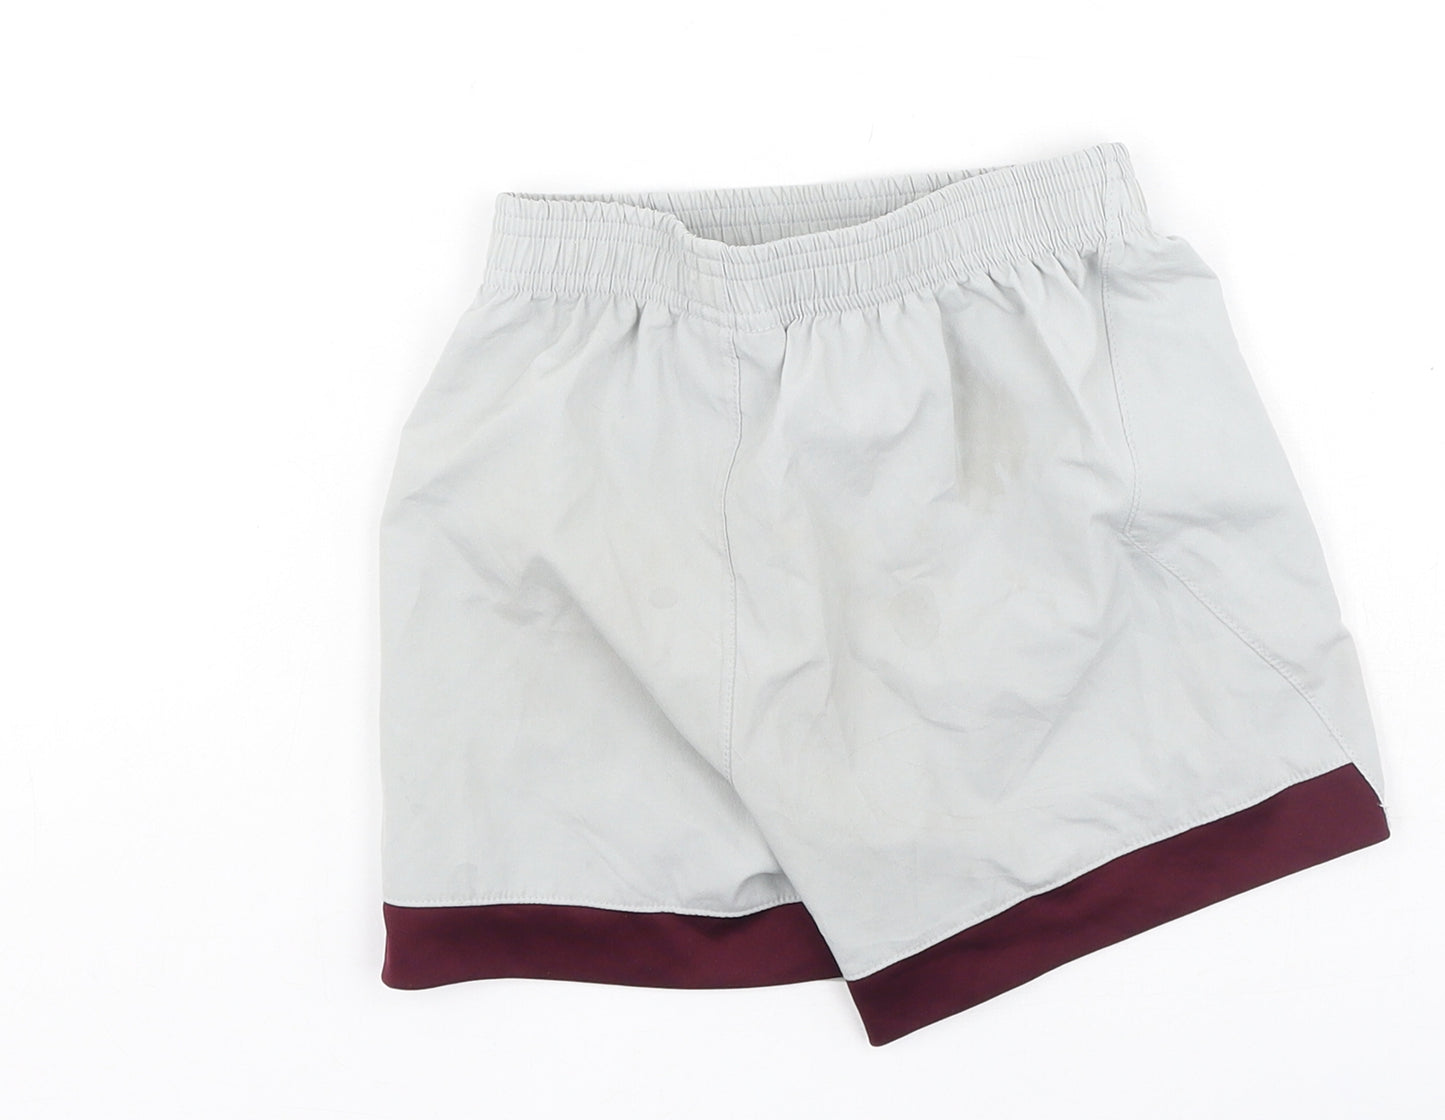 Umbro Boys Grey  Polyester Sweat Shorts Size 2-3 Years  Regular